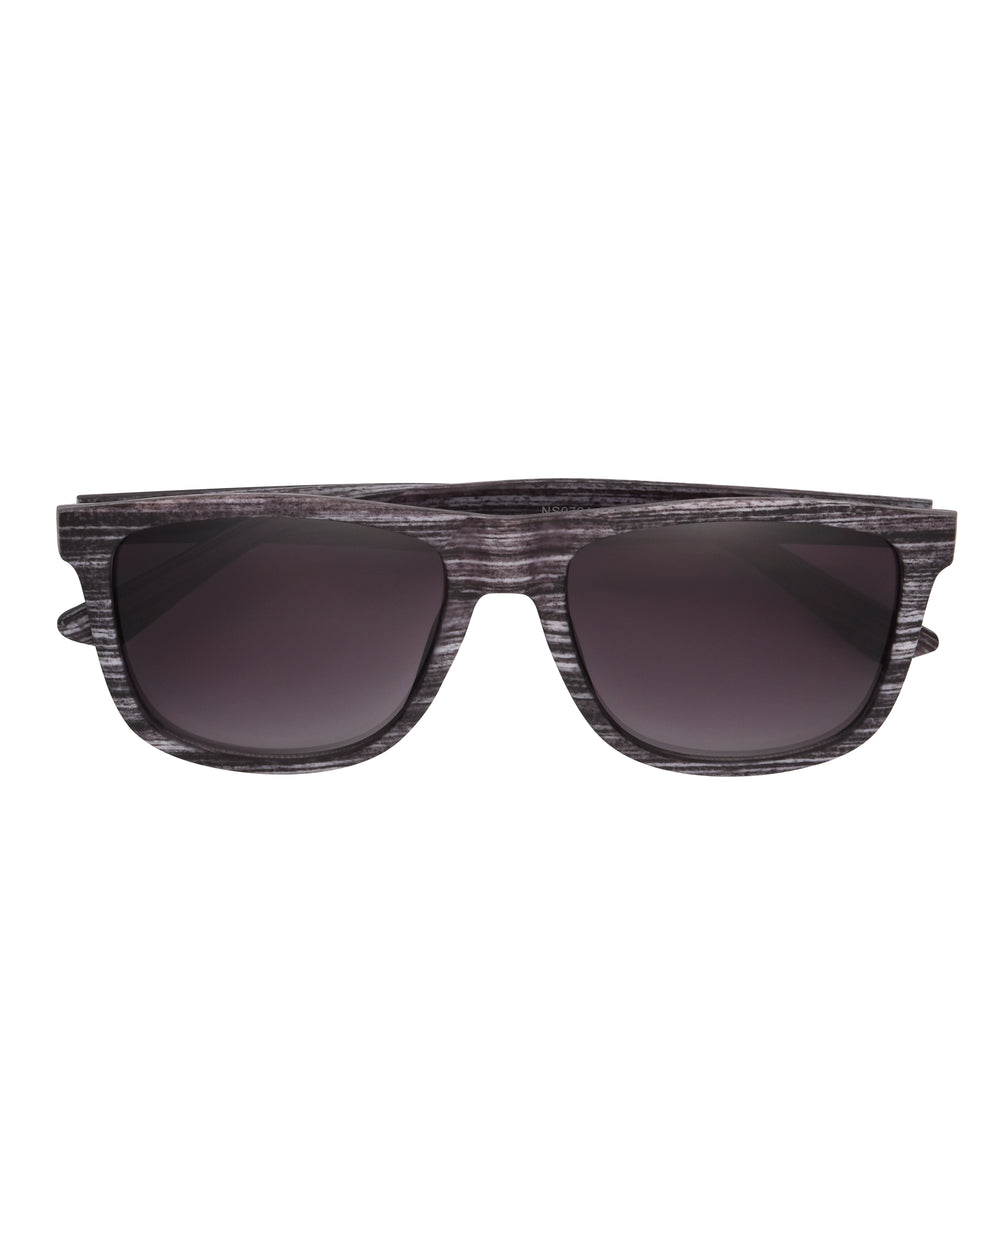 Talise Way-Style Frame Sunglasses - Black/Wood - Body Glove